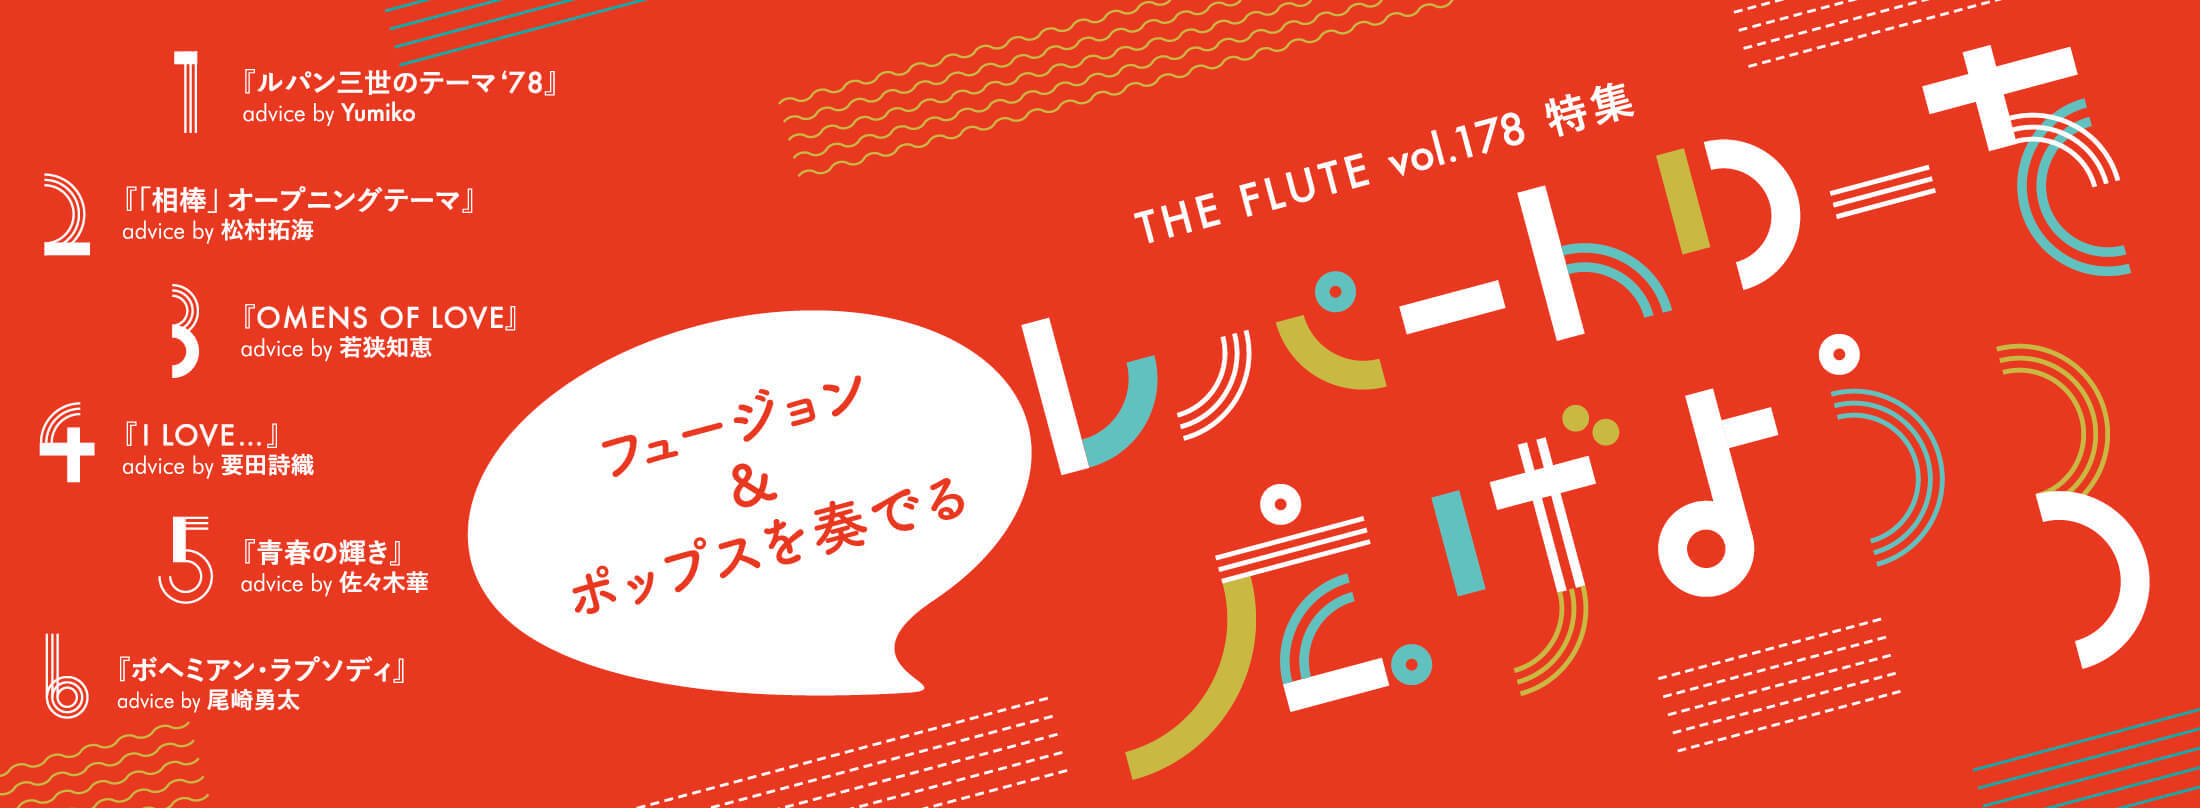 The Fluteオンライン記事 178号特集 ルパン三世のテーマ 78 Advice By Yumiko